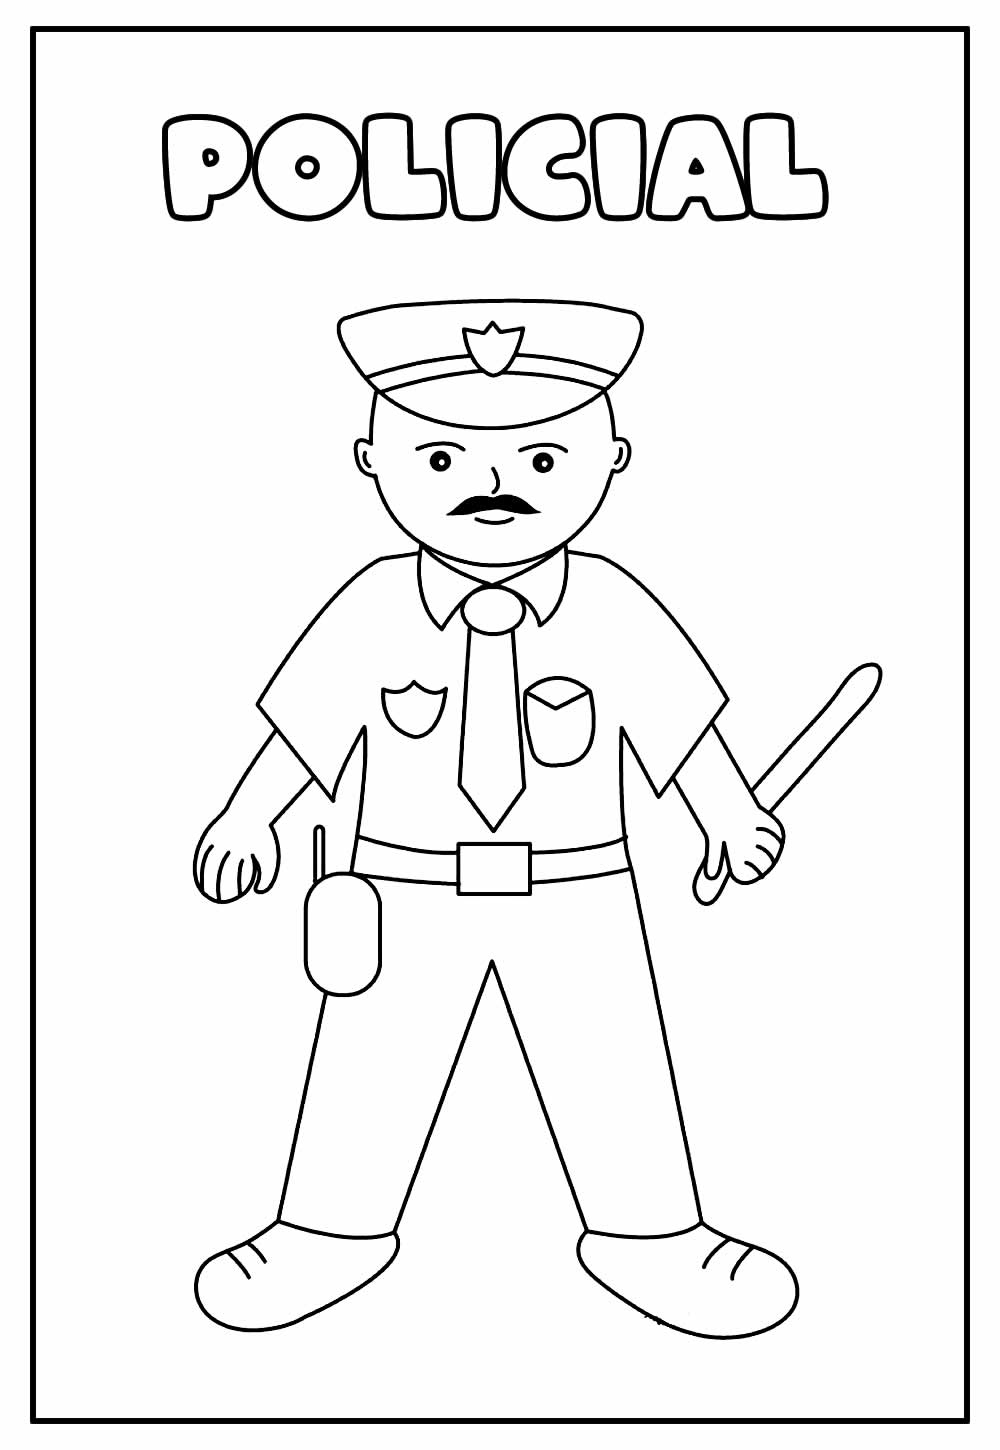 Desenho Educativo para Colorir de Policial